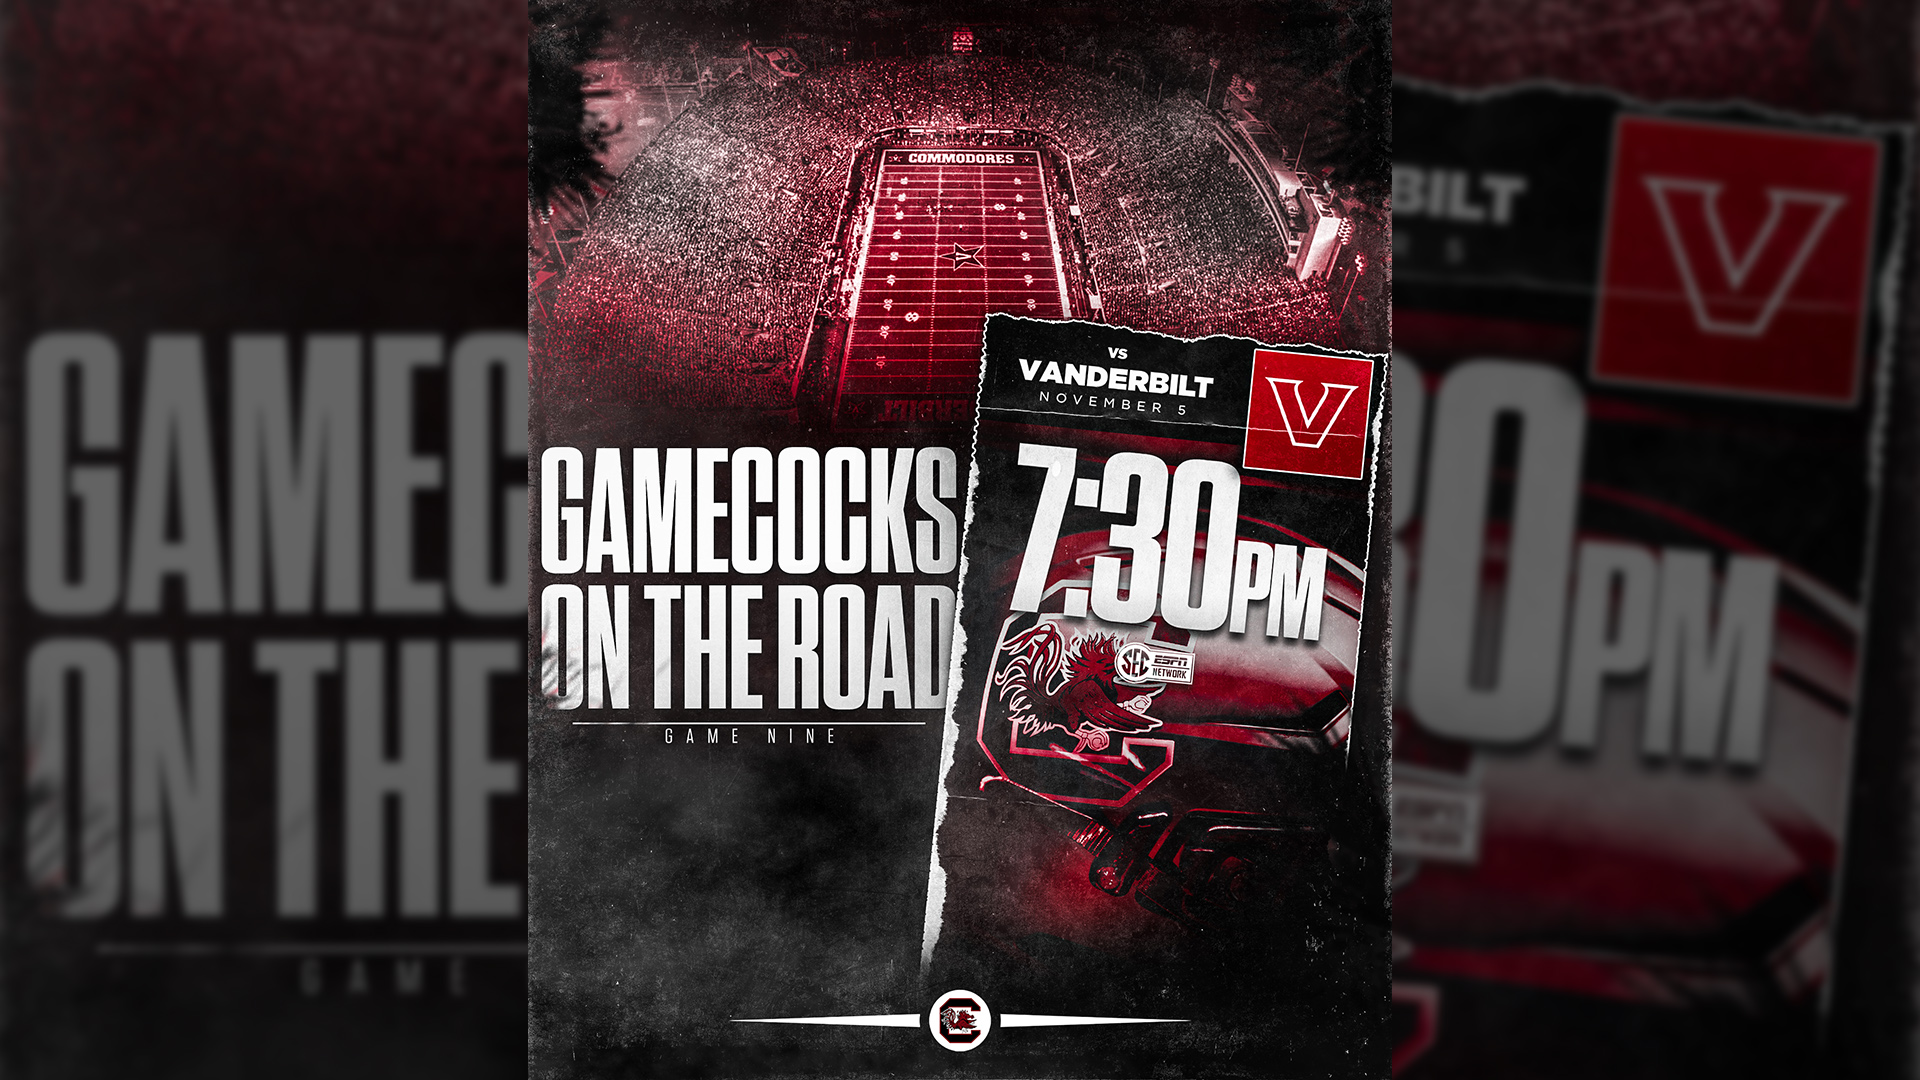 Gamecocks travel to Vanderbilt for Saturday Night Showdown